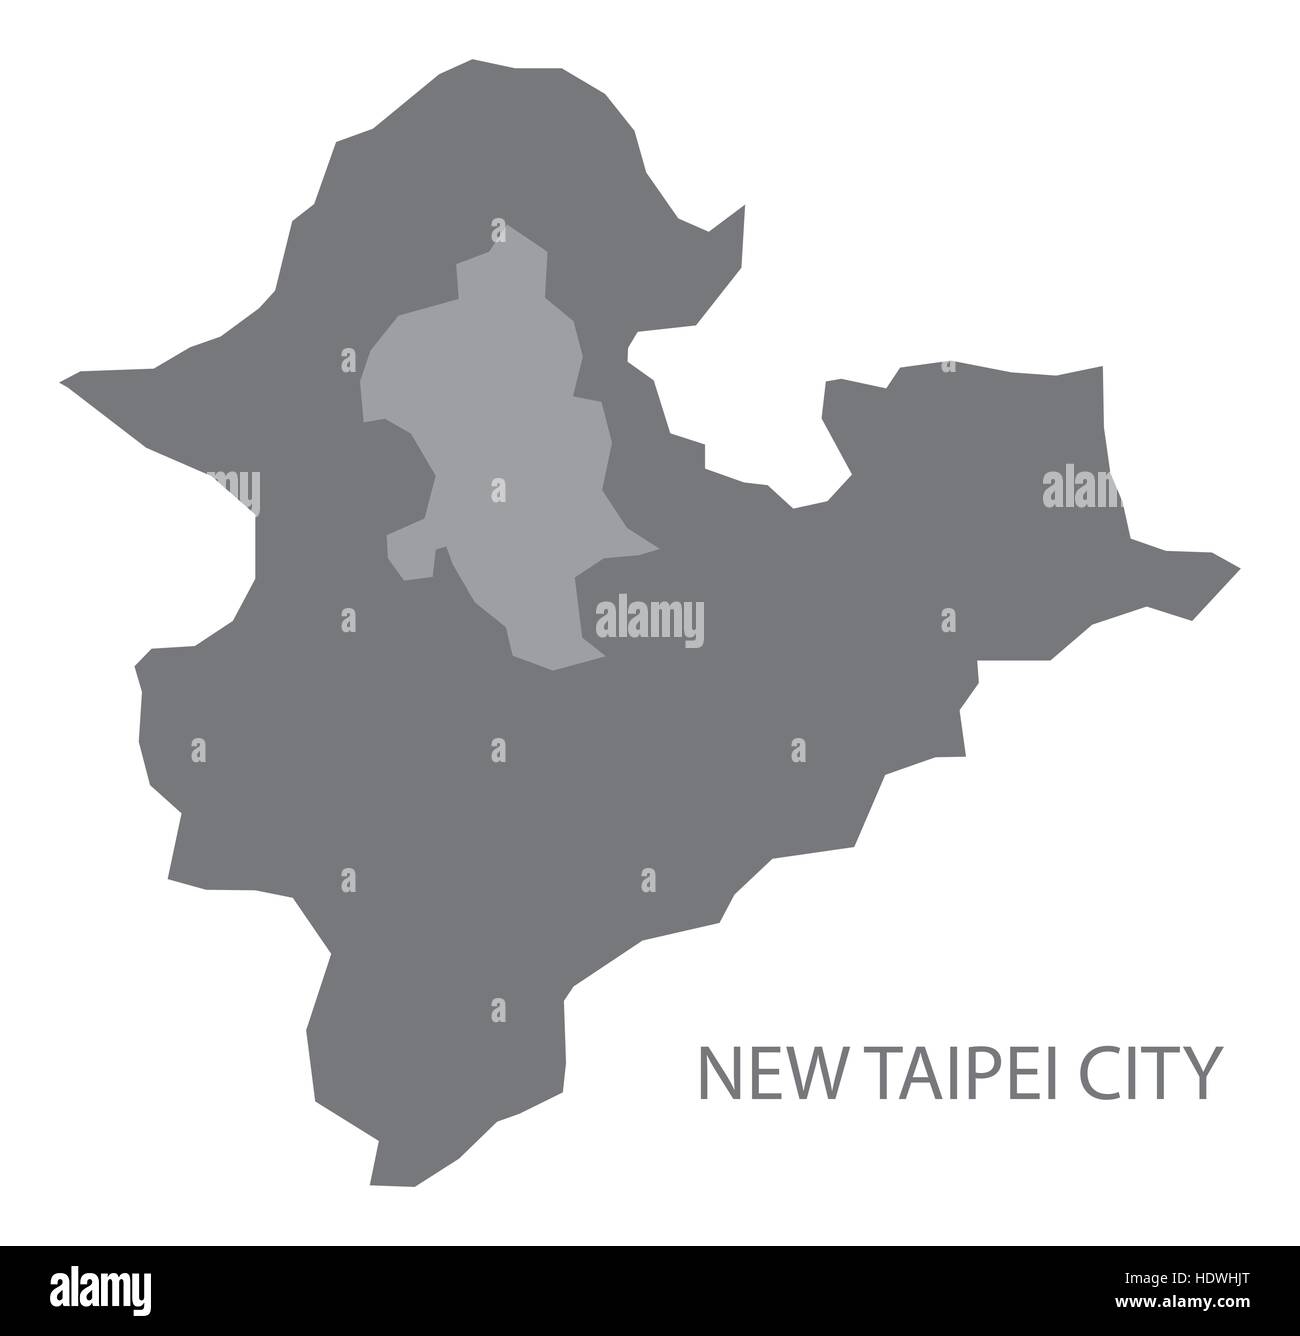 New Taipei City Taiwan Map grey Stock Vector